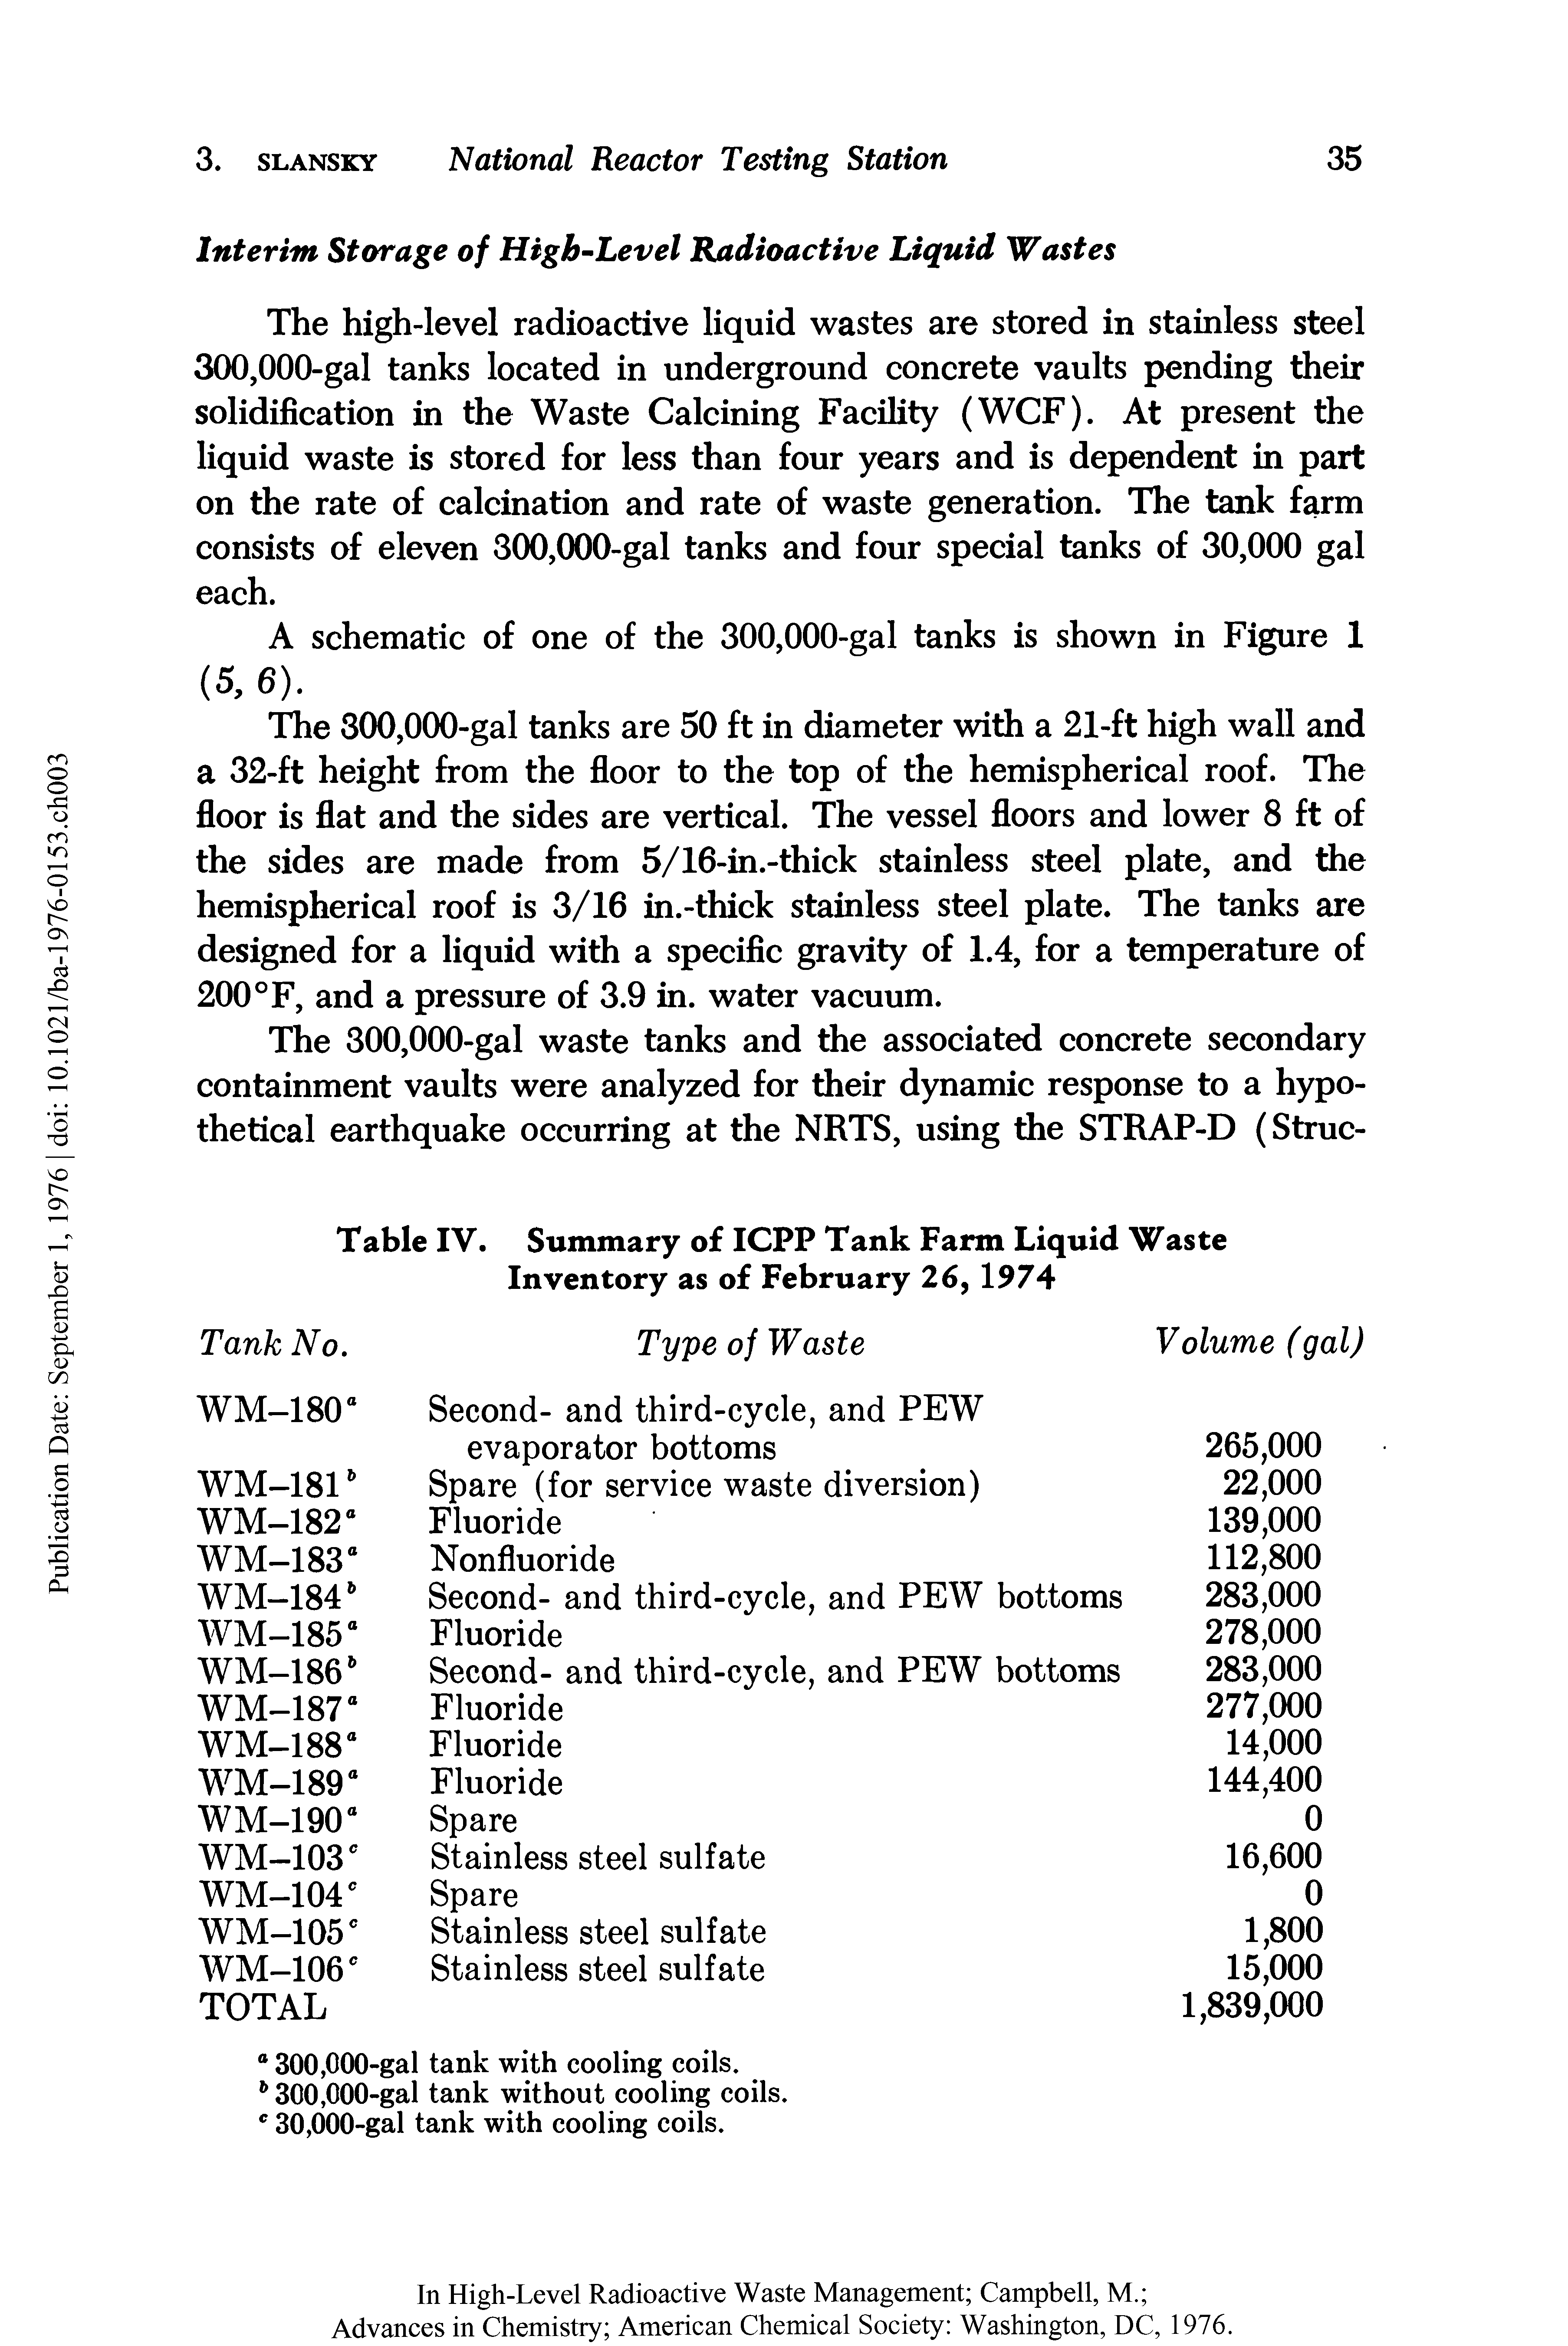 Table IV. Summary of ICPP Tank Farm Liquid Waste Inventory as of February 26, 1974...